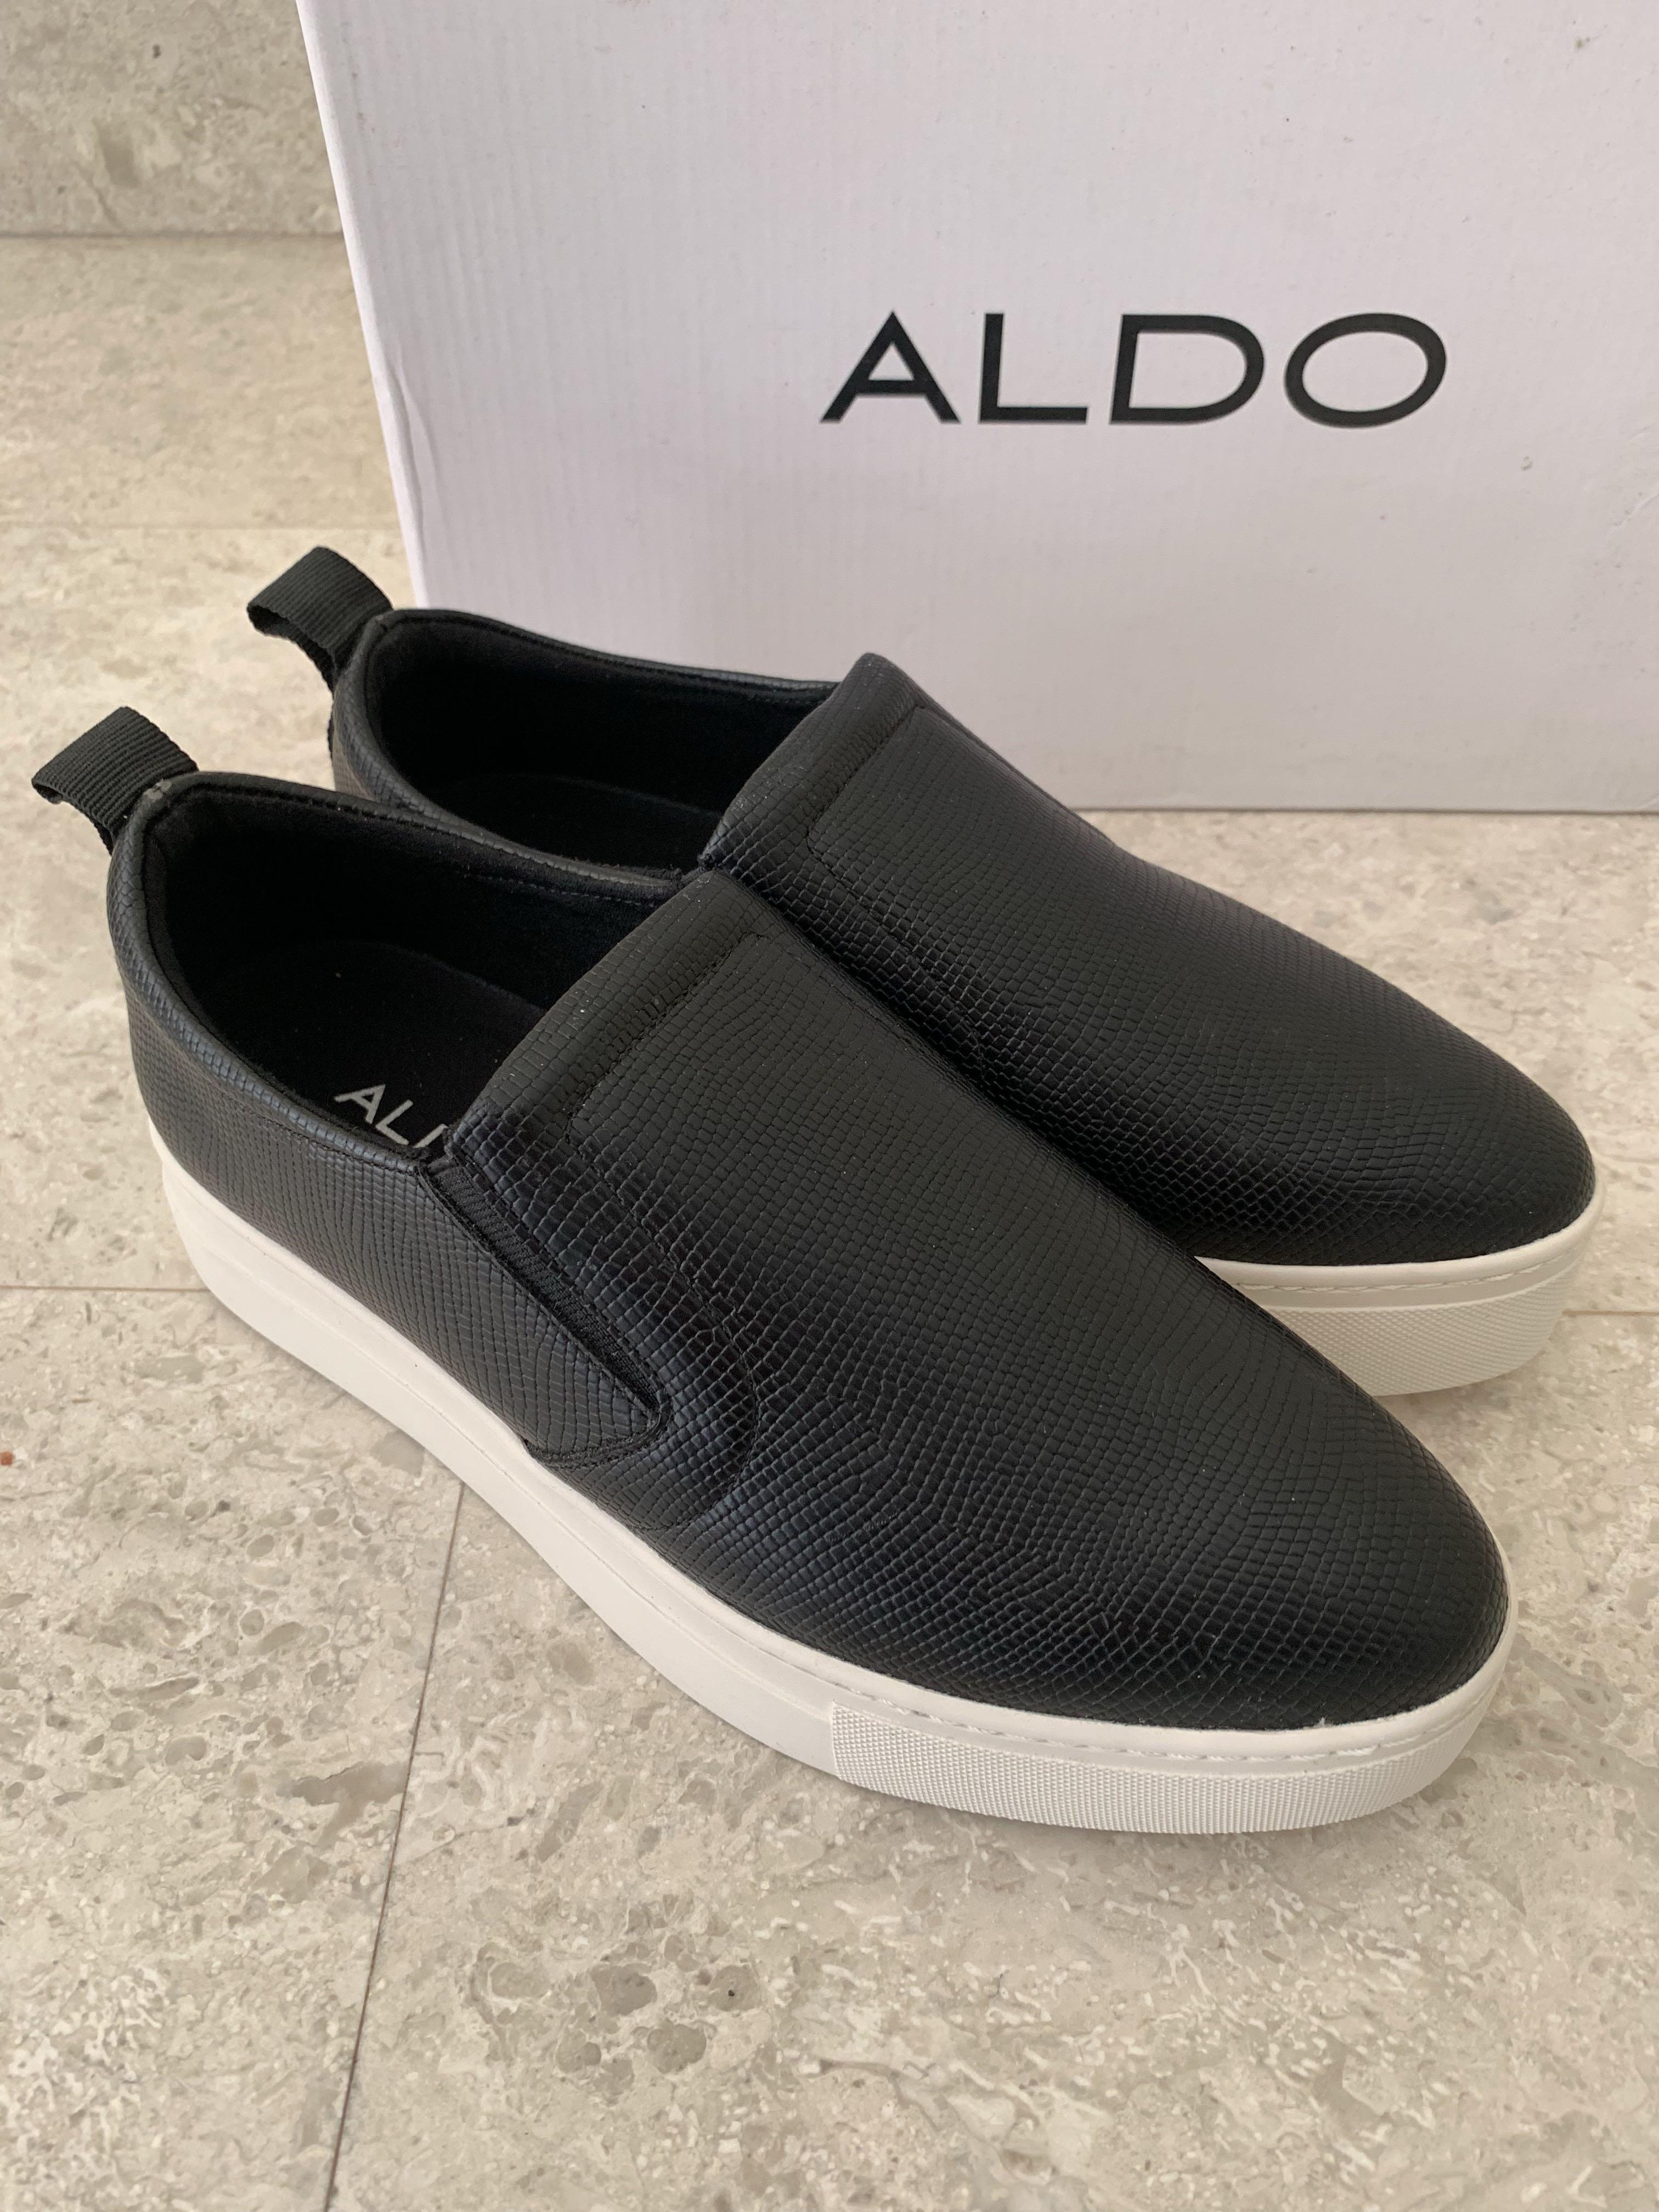 Aldo Leather Slip-On Shoes, Women's 